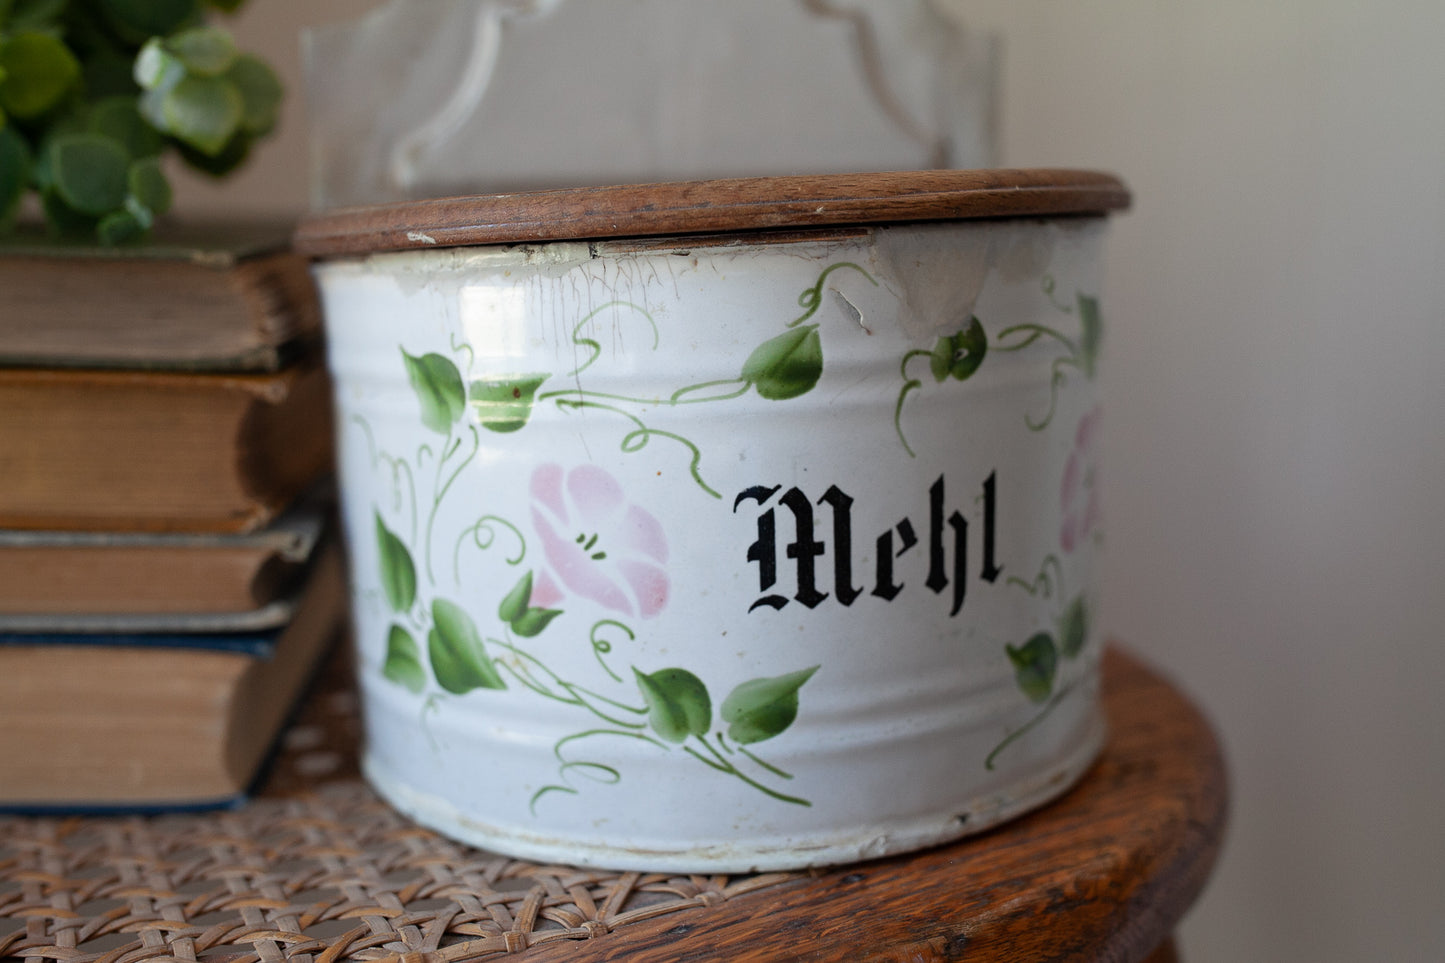 Antique German Enamelware Flour Box - Mehl Box